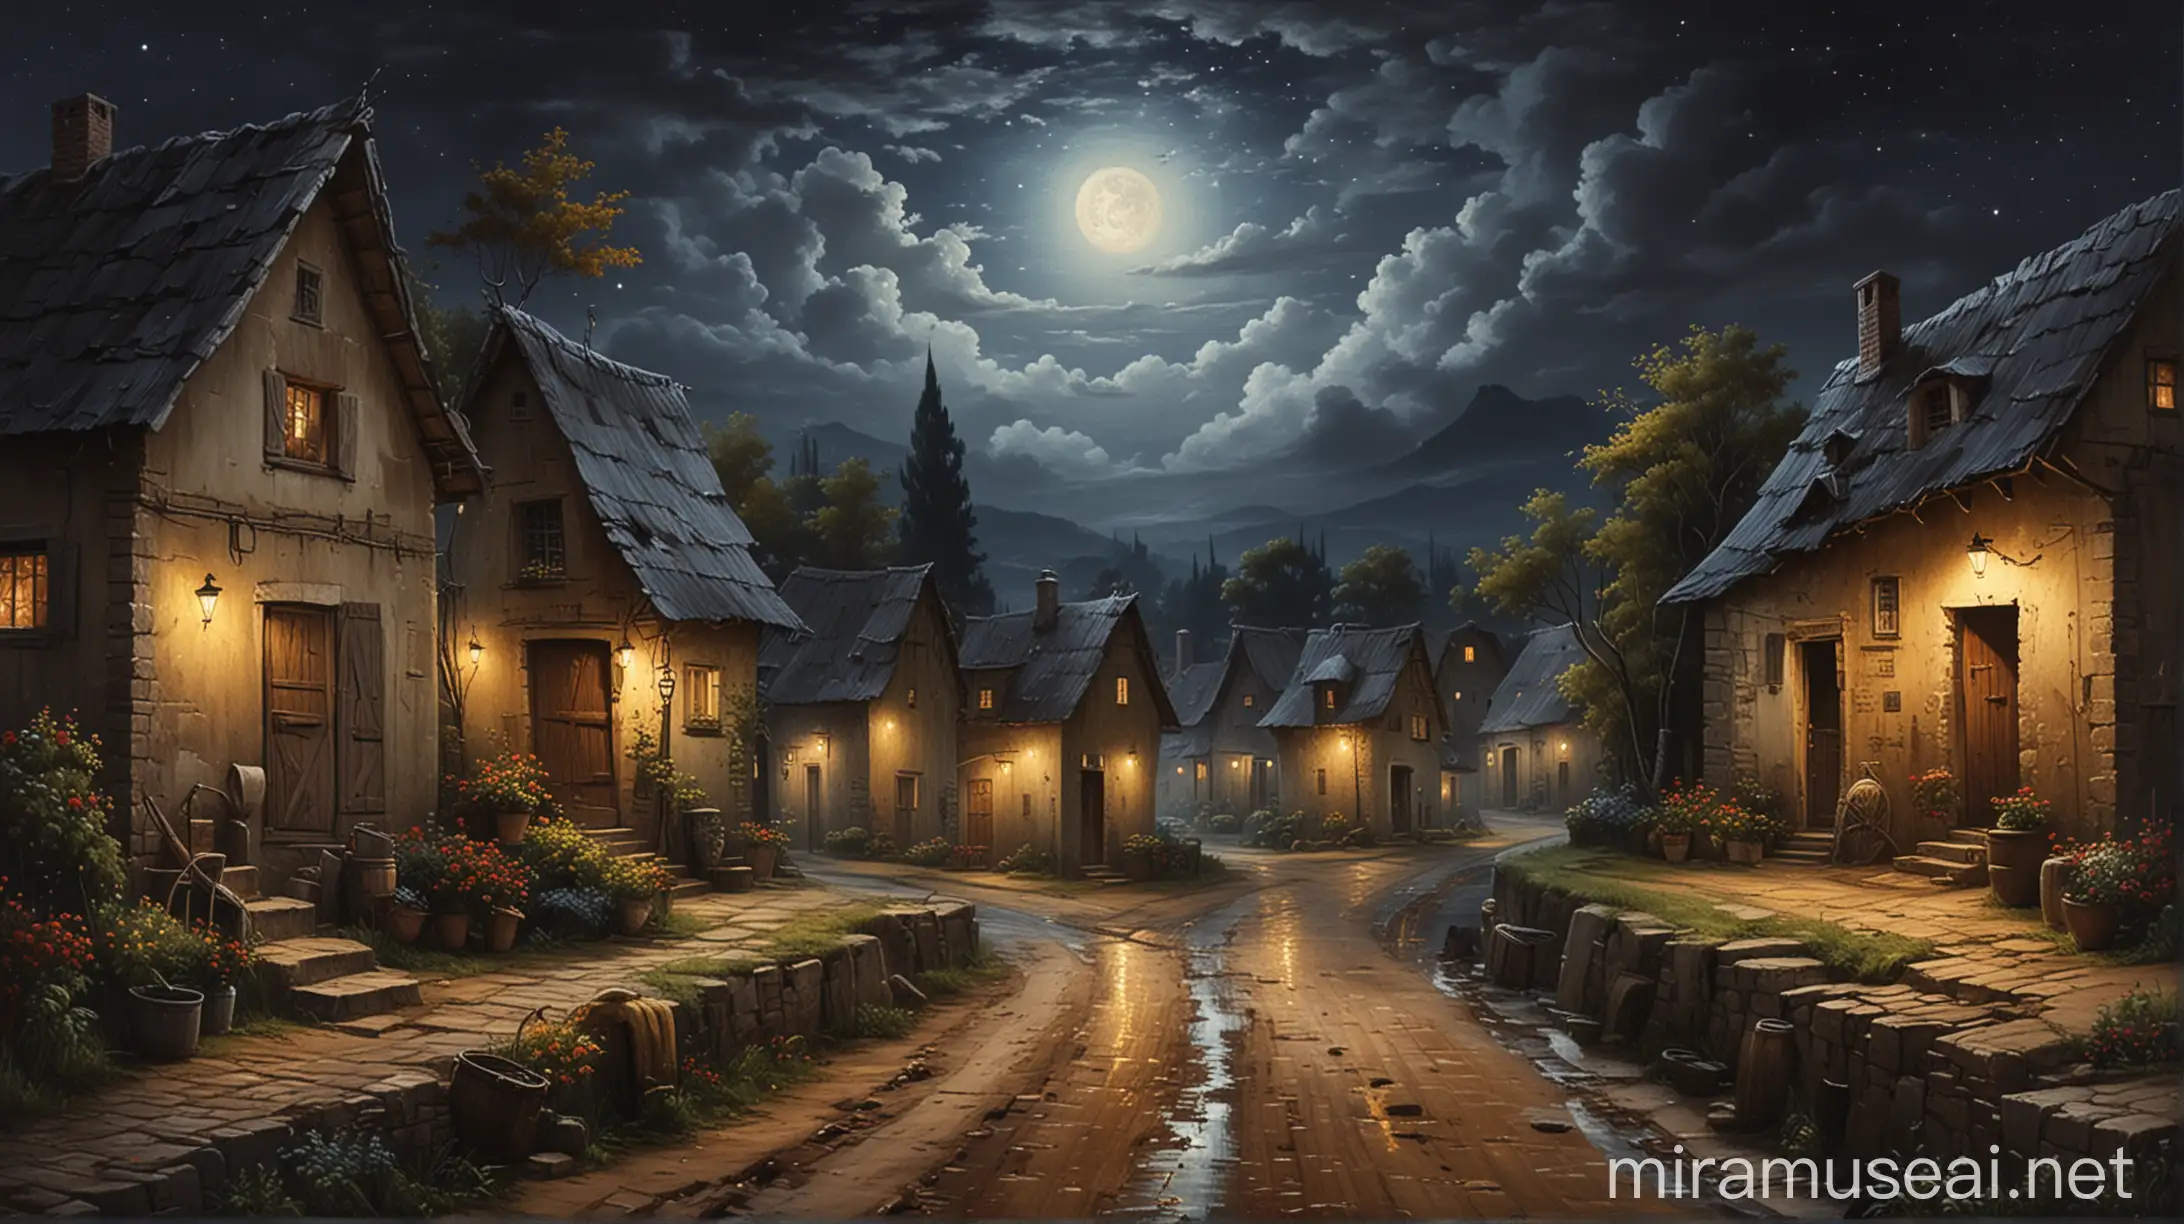 Quiet Village at Night Oil Painting